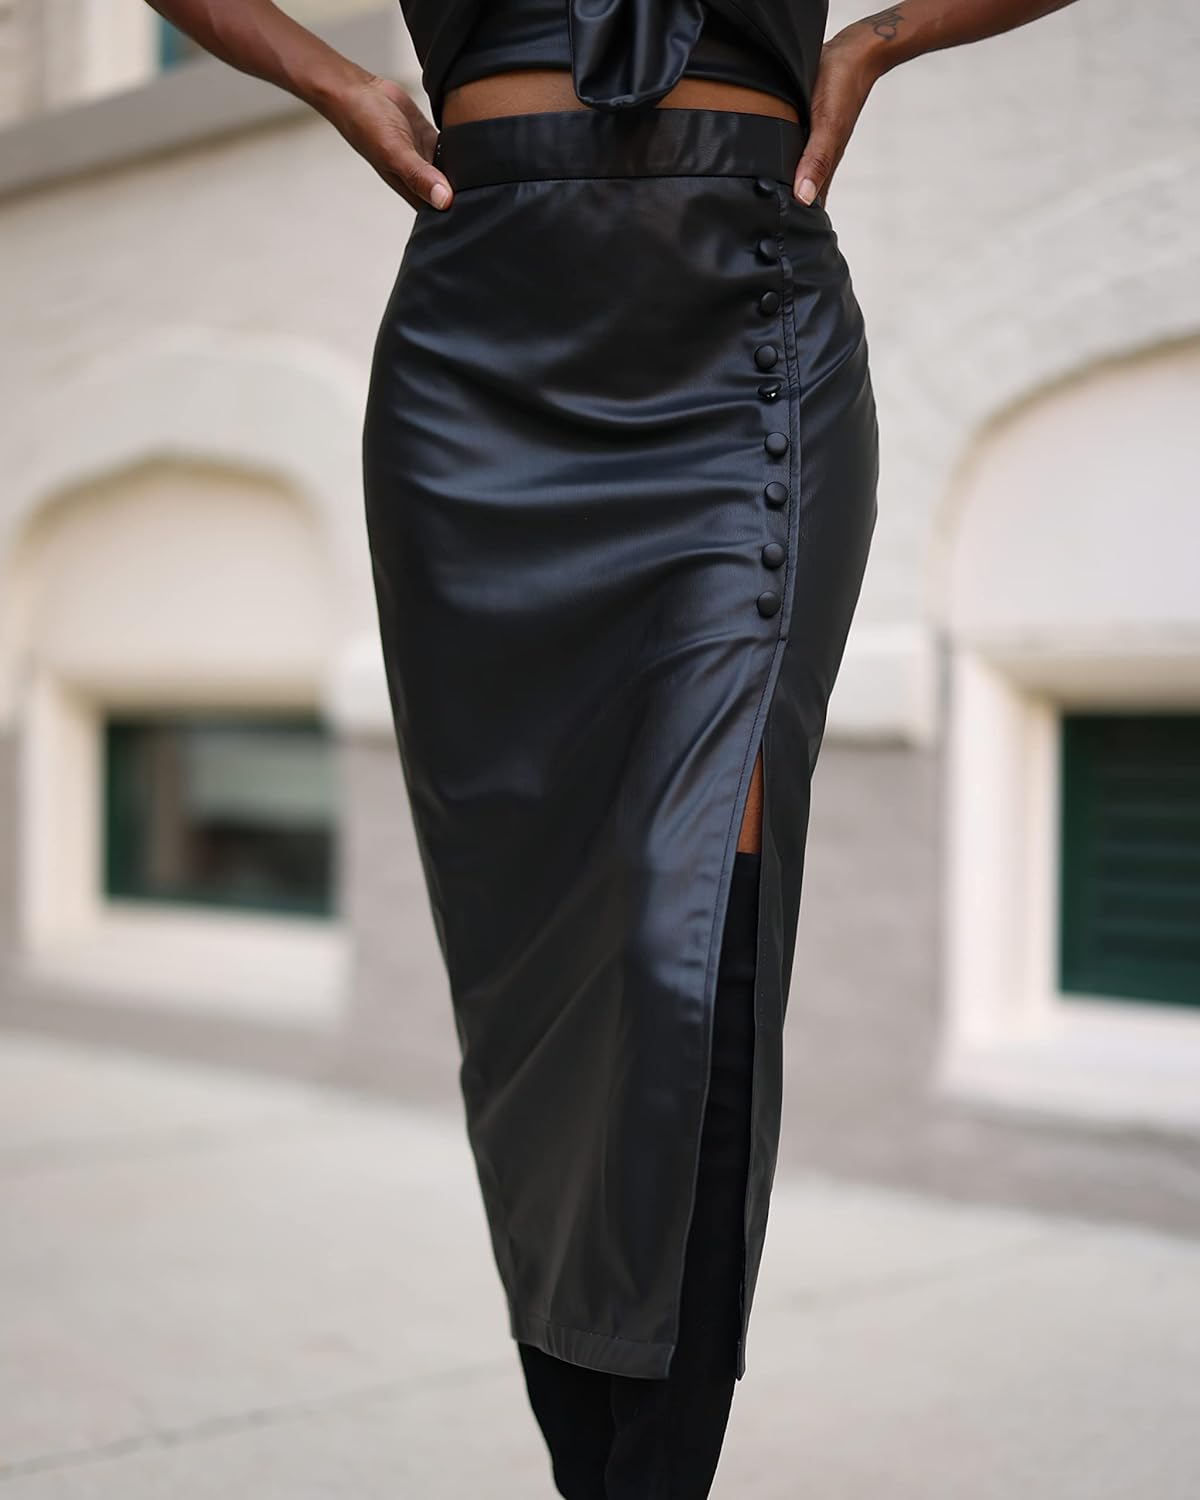 The Drop Women' Black Faux Leather Midi Skirt by @signedblake